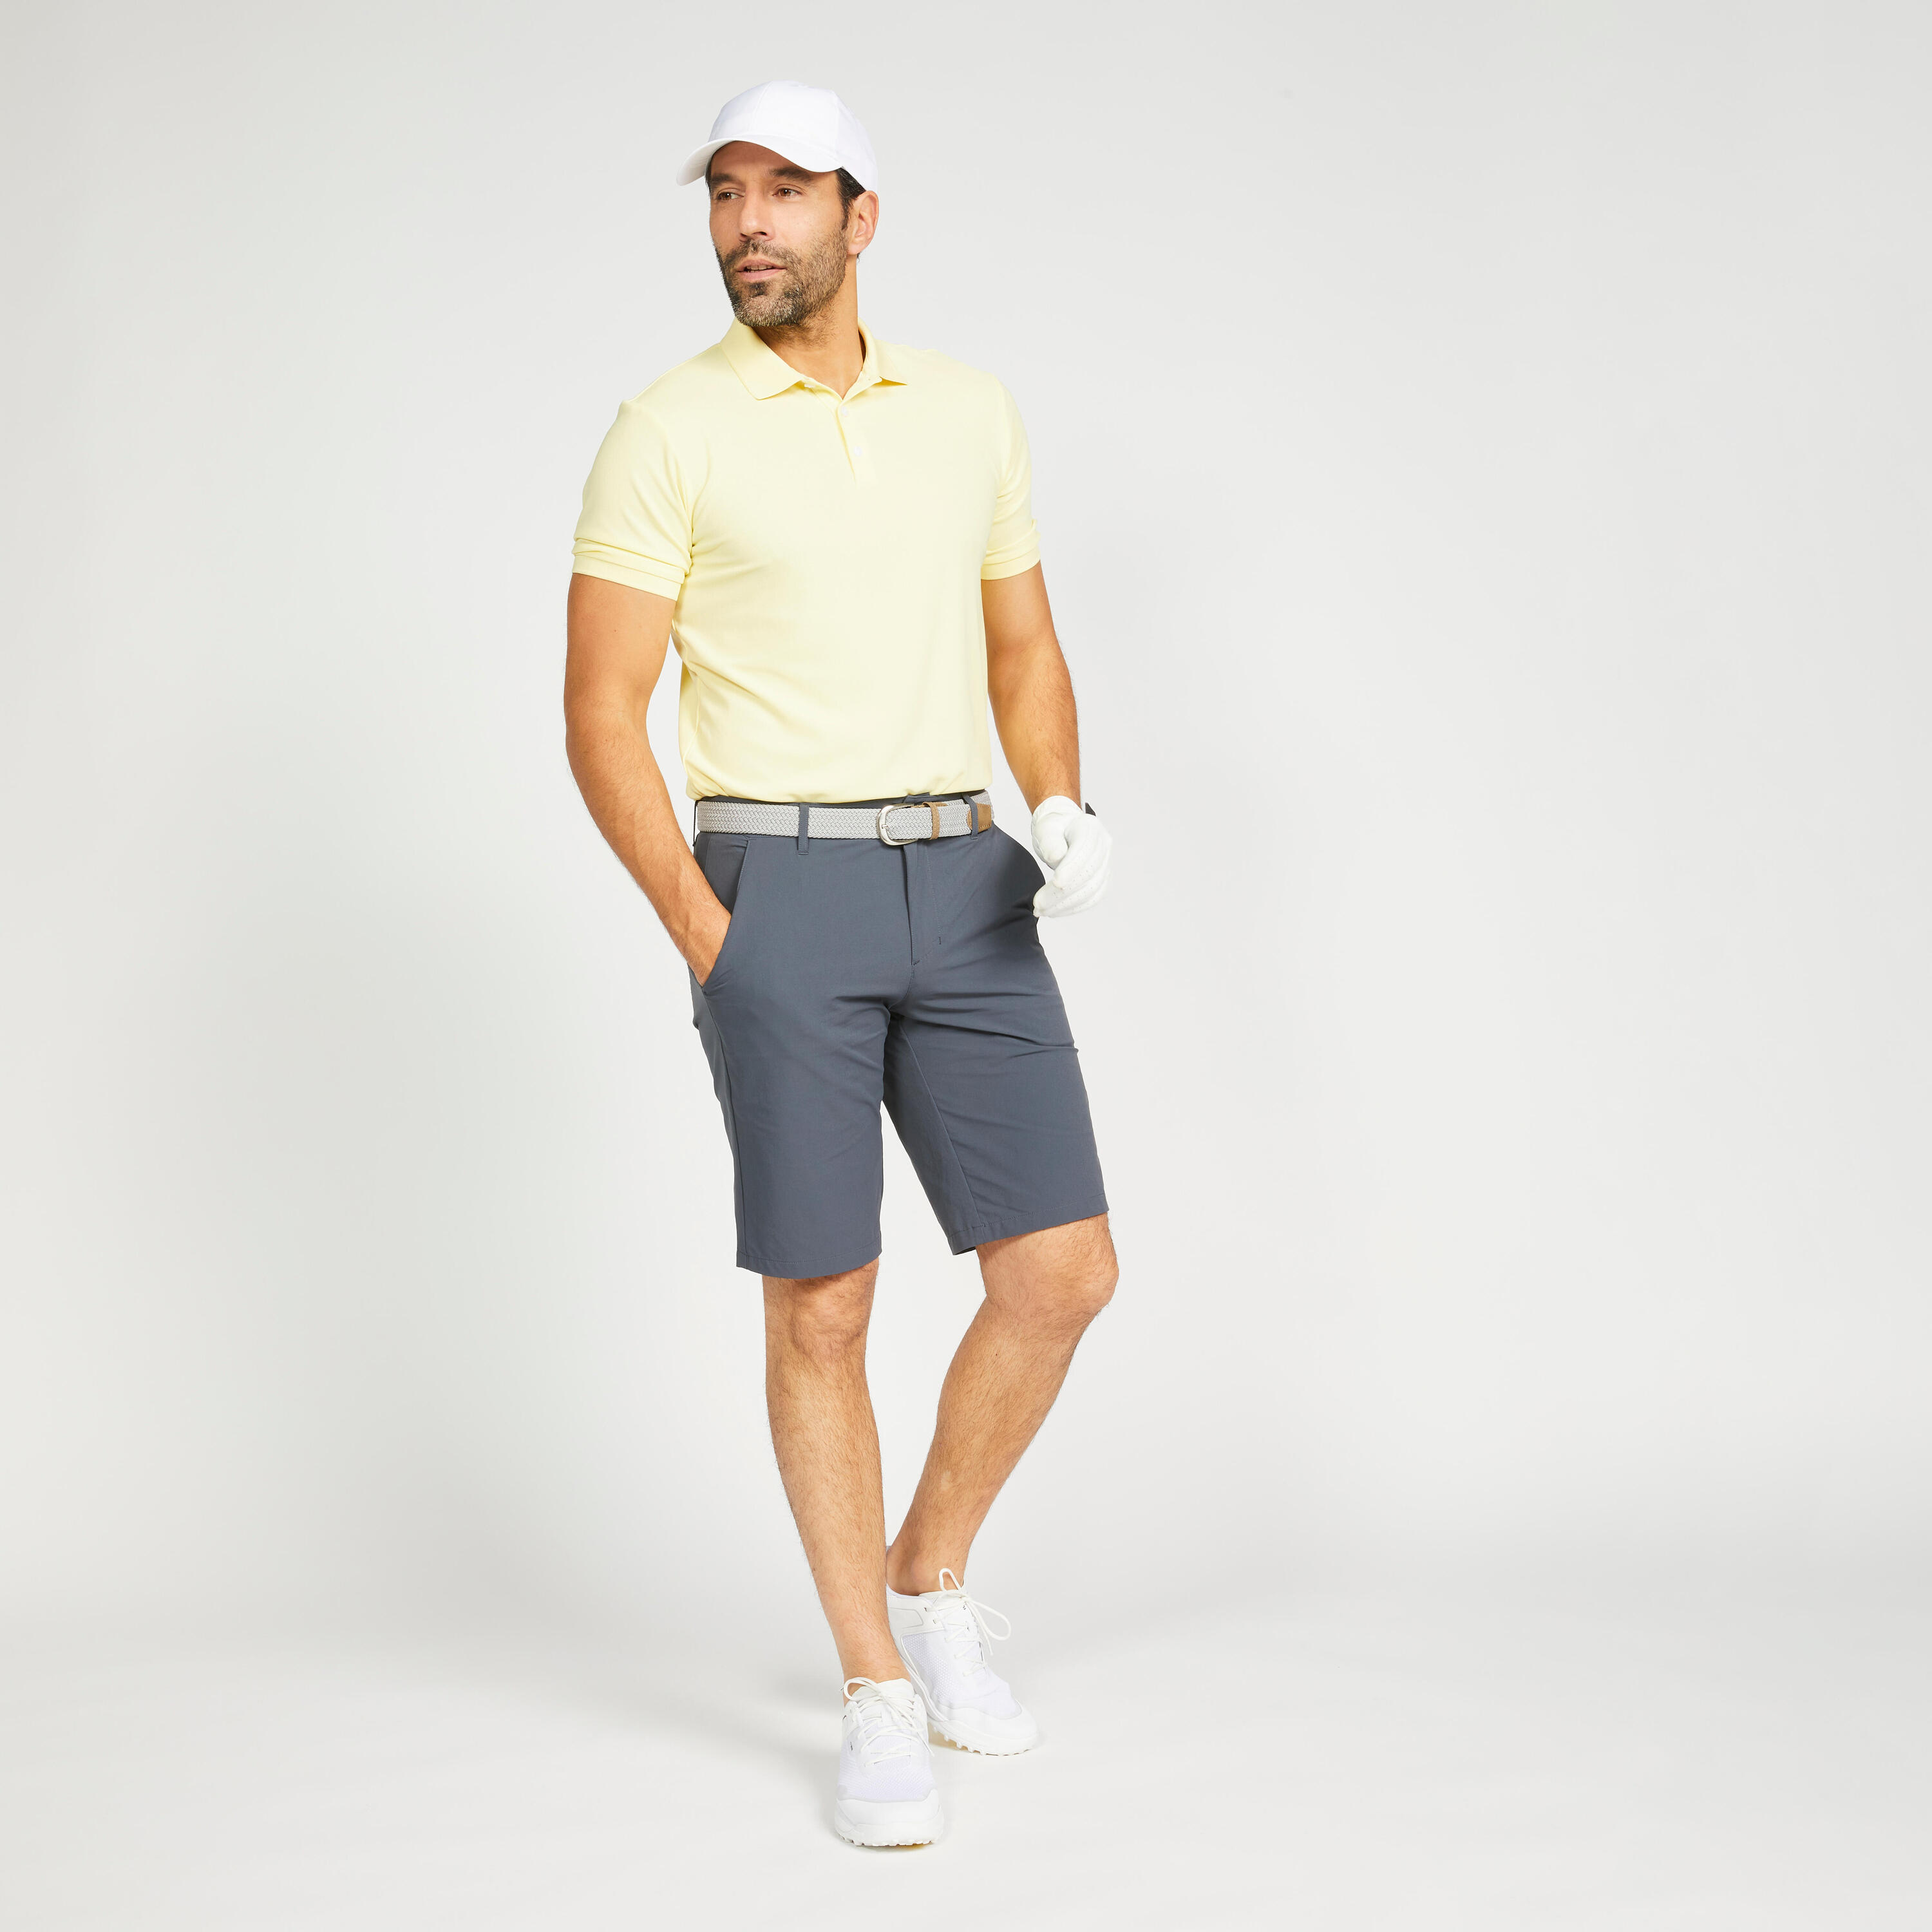 Men's golf short-sleeved polo shirt - WW500 yellow 2/6